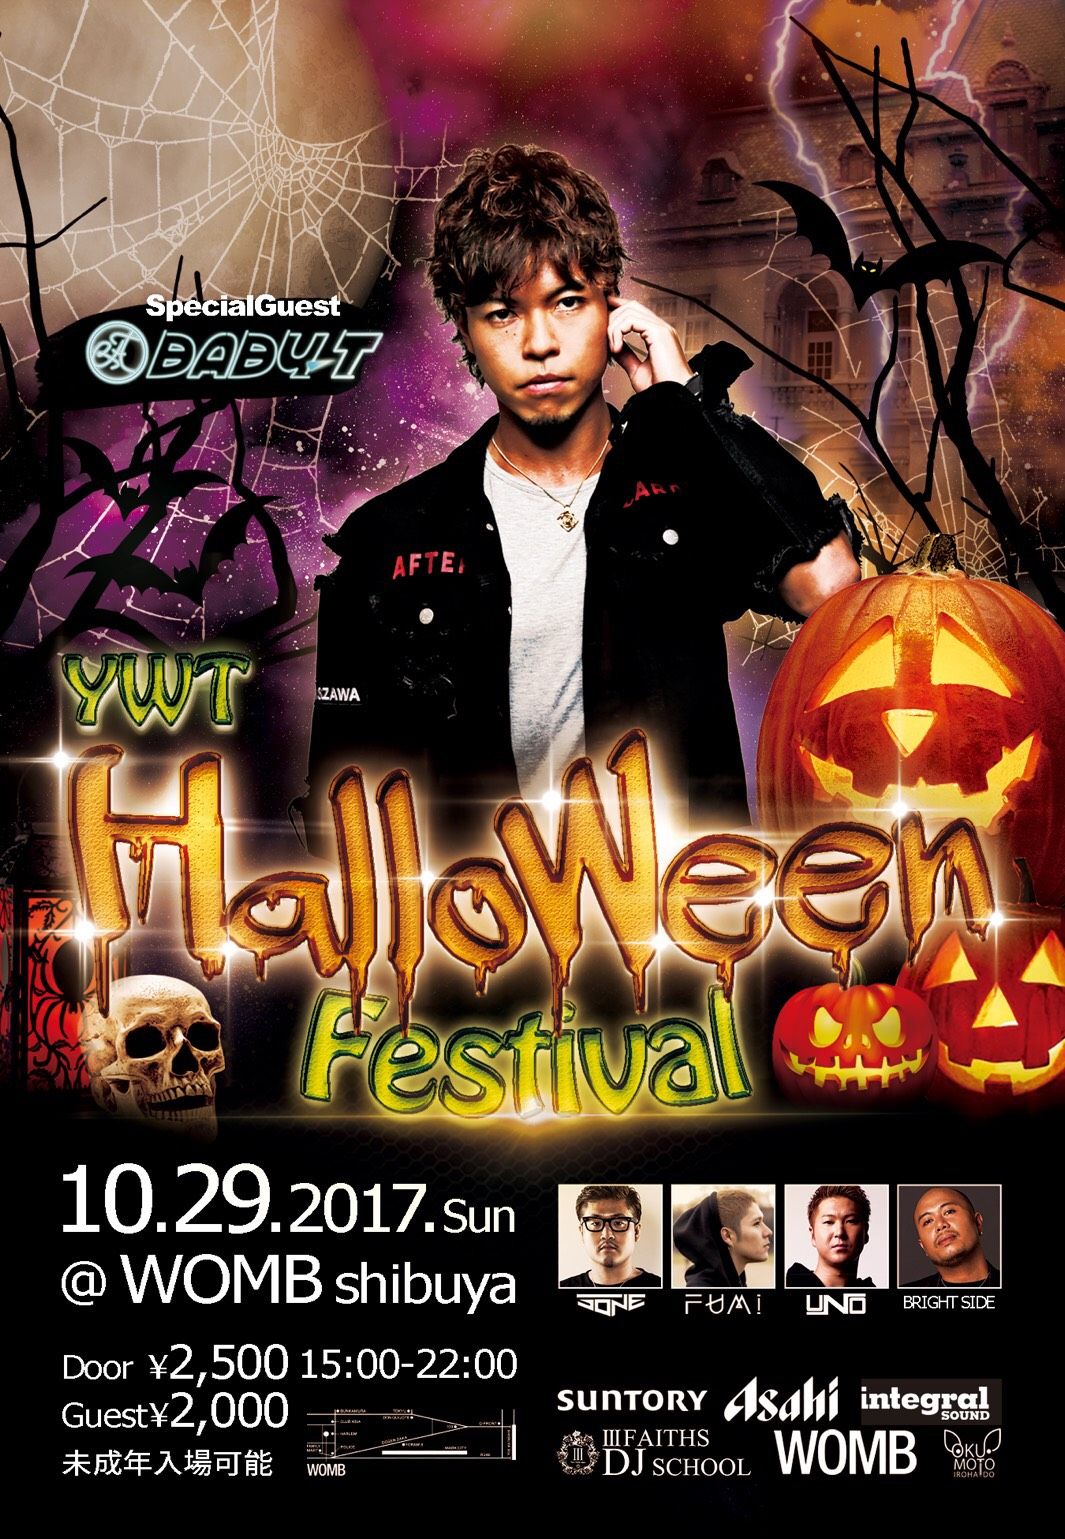 YWT Halloween festival 2017